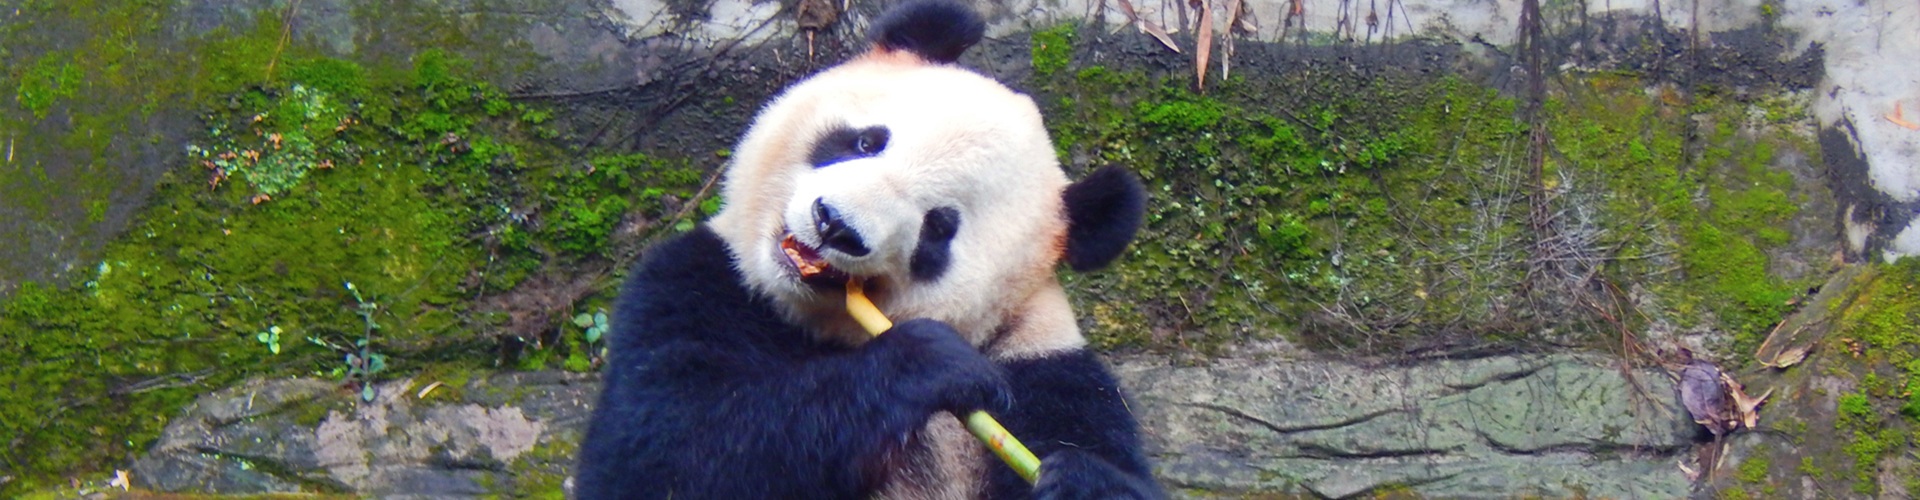 Bifengxia Panda Base - Nature and Panda Sightseeing